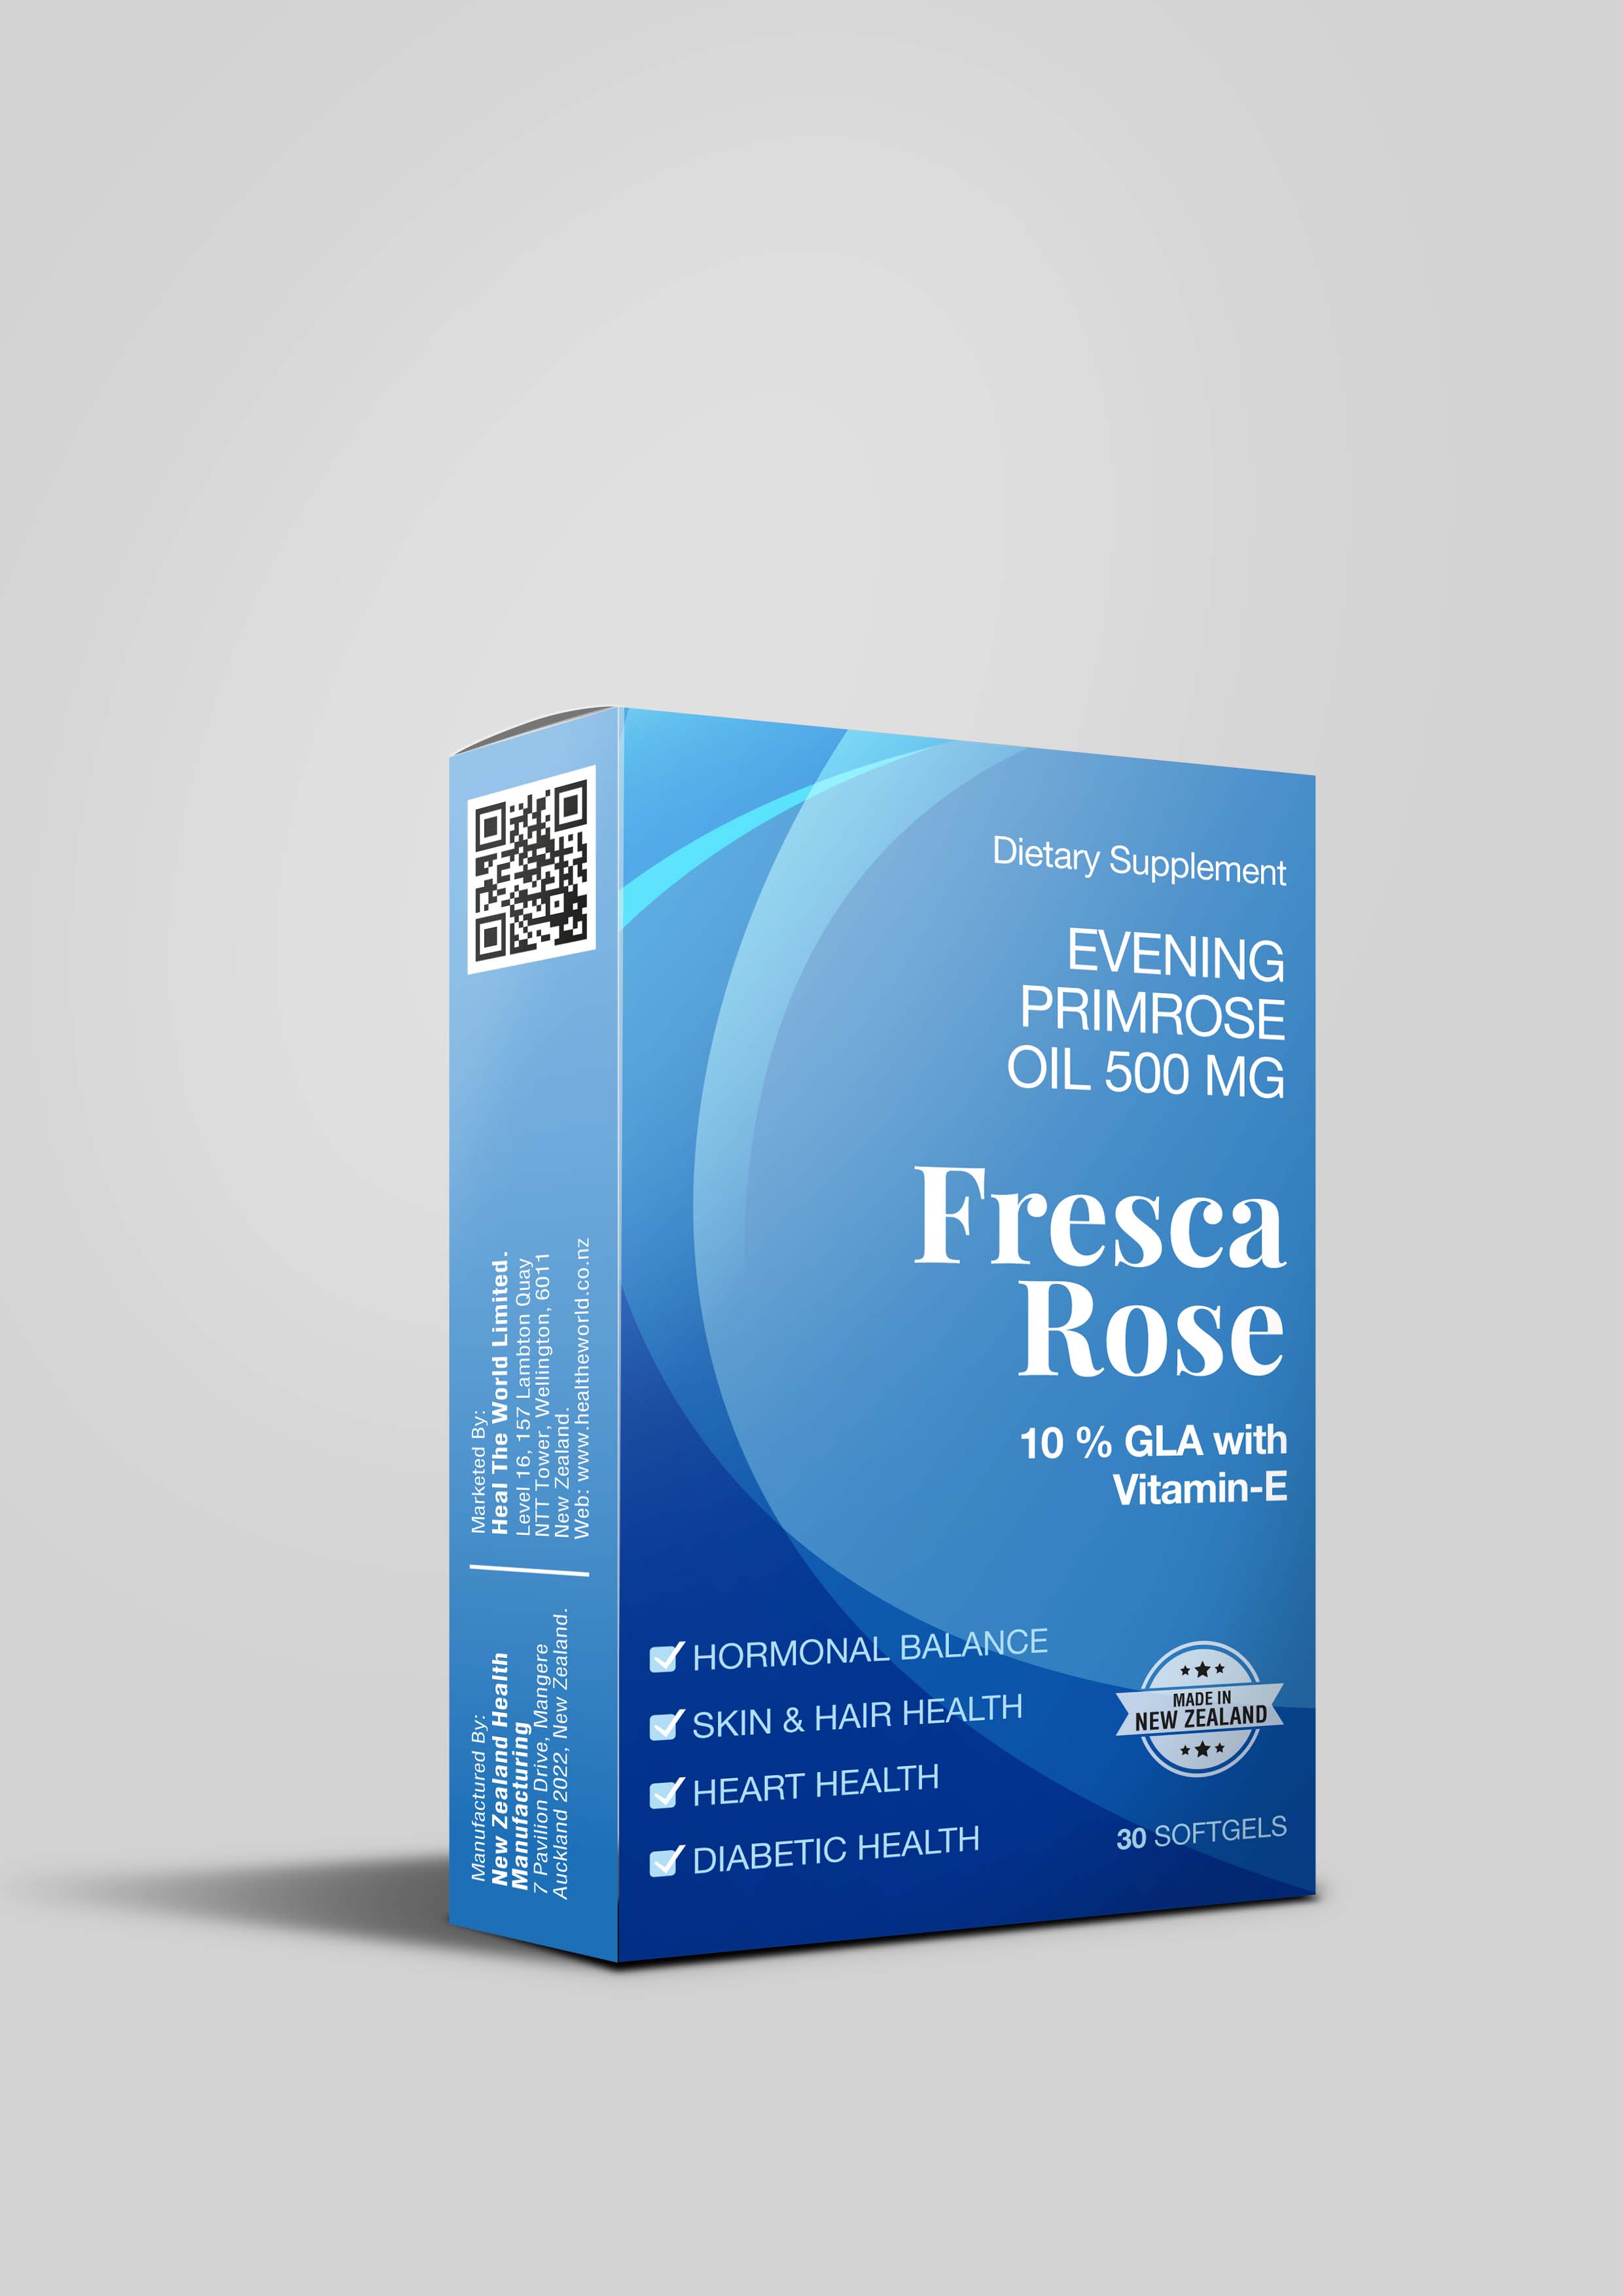 Fresca Rose 500 HTW Limited copy